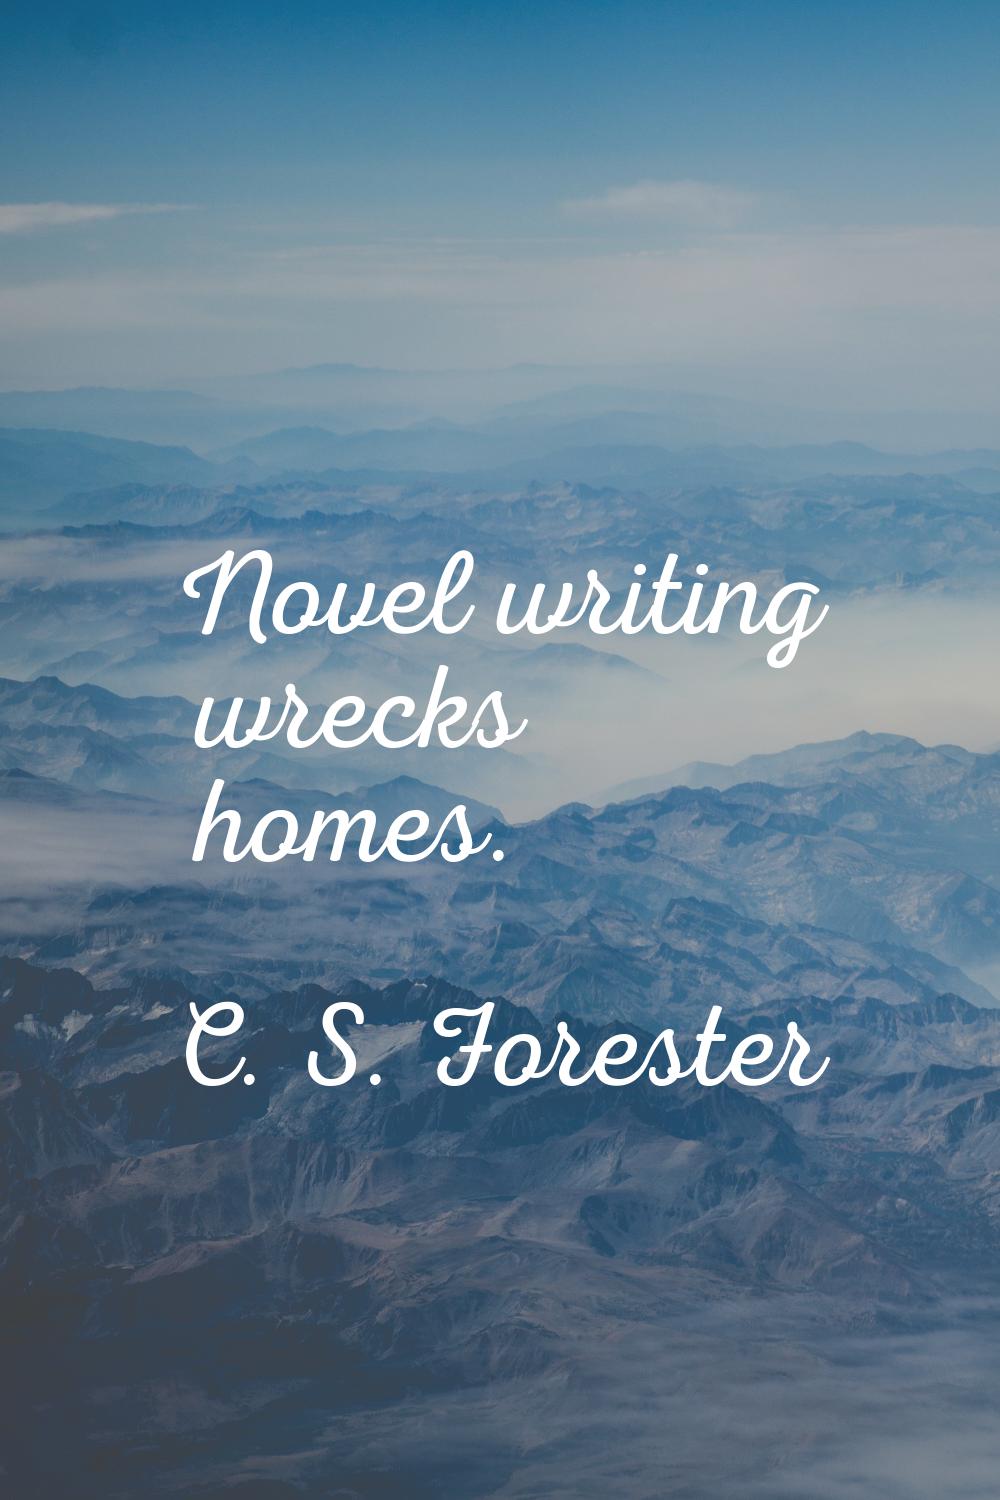 Novel writing wrecks homes.